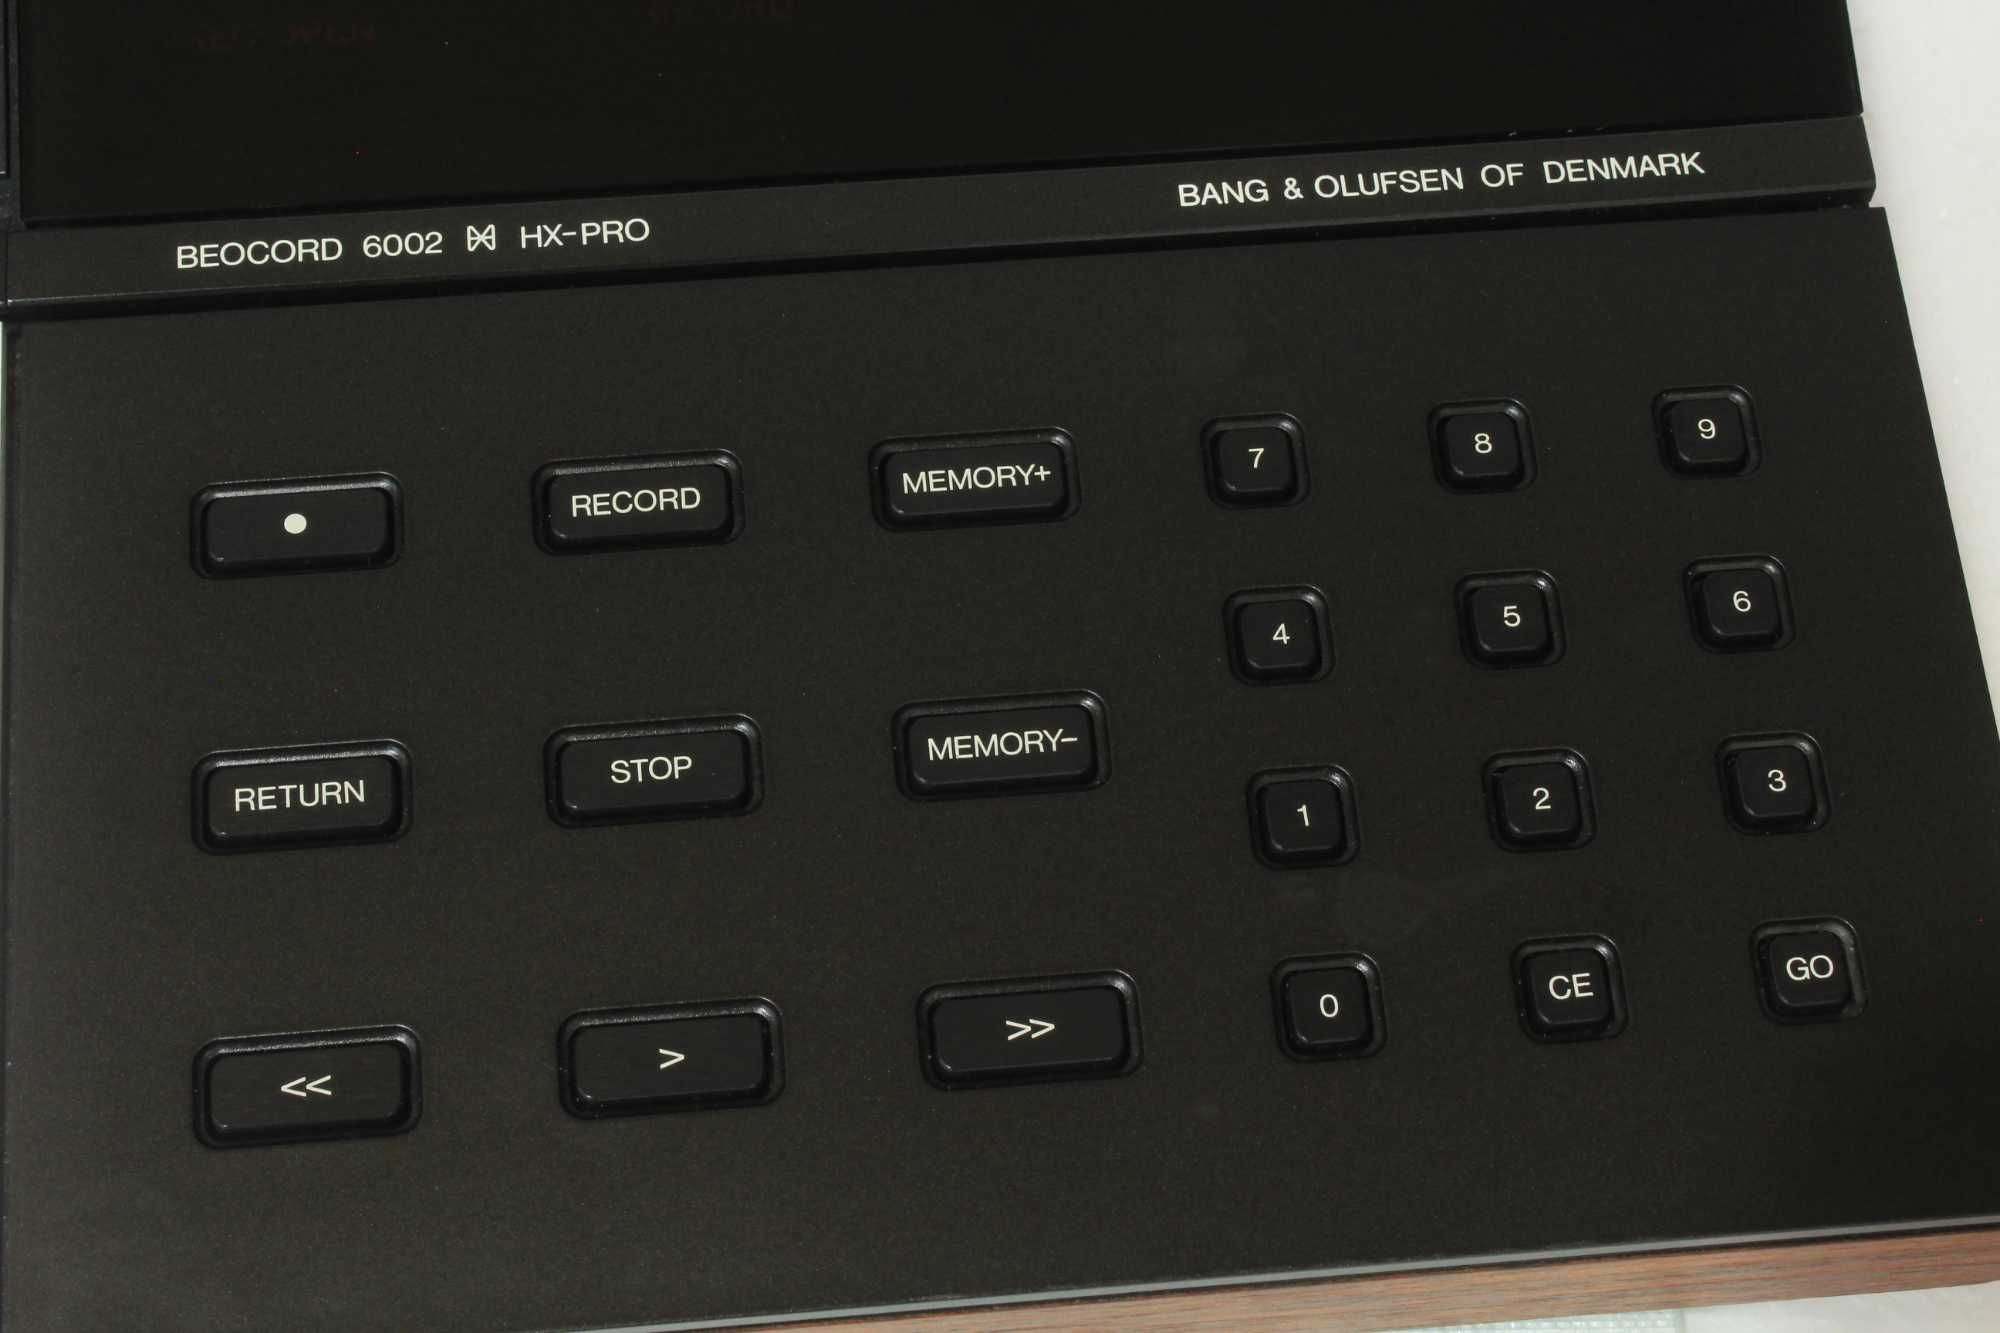 Deck Beocord 6002 HX Pro(Bang&Olufsen).